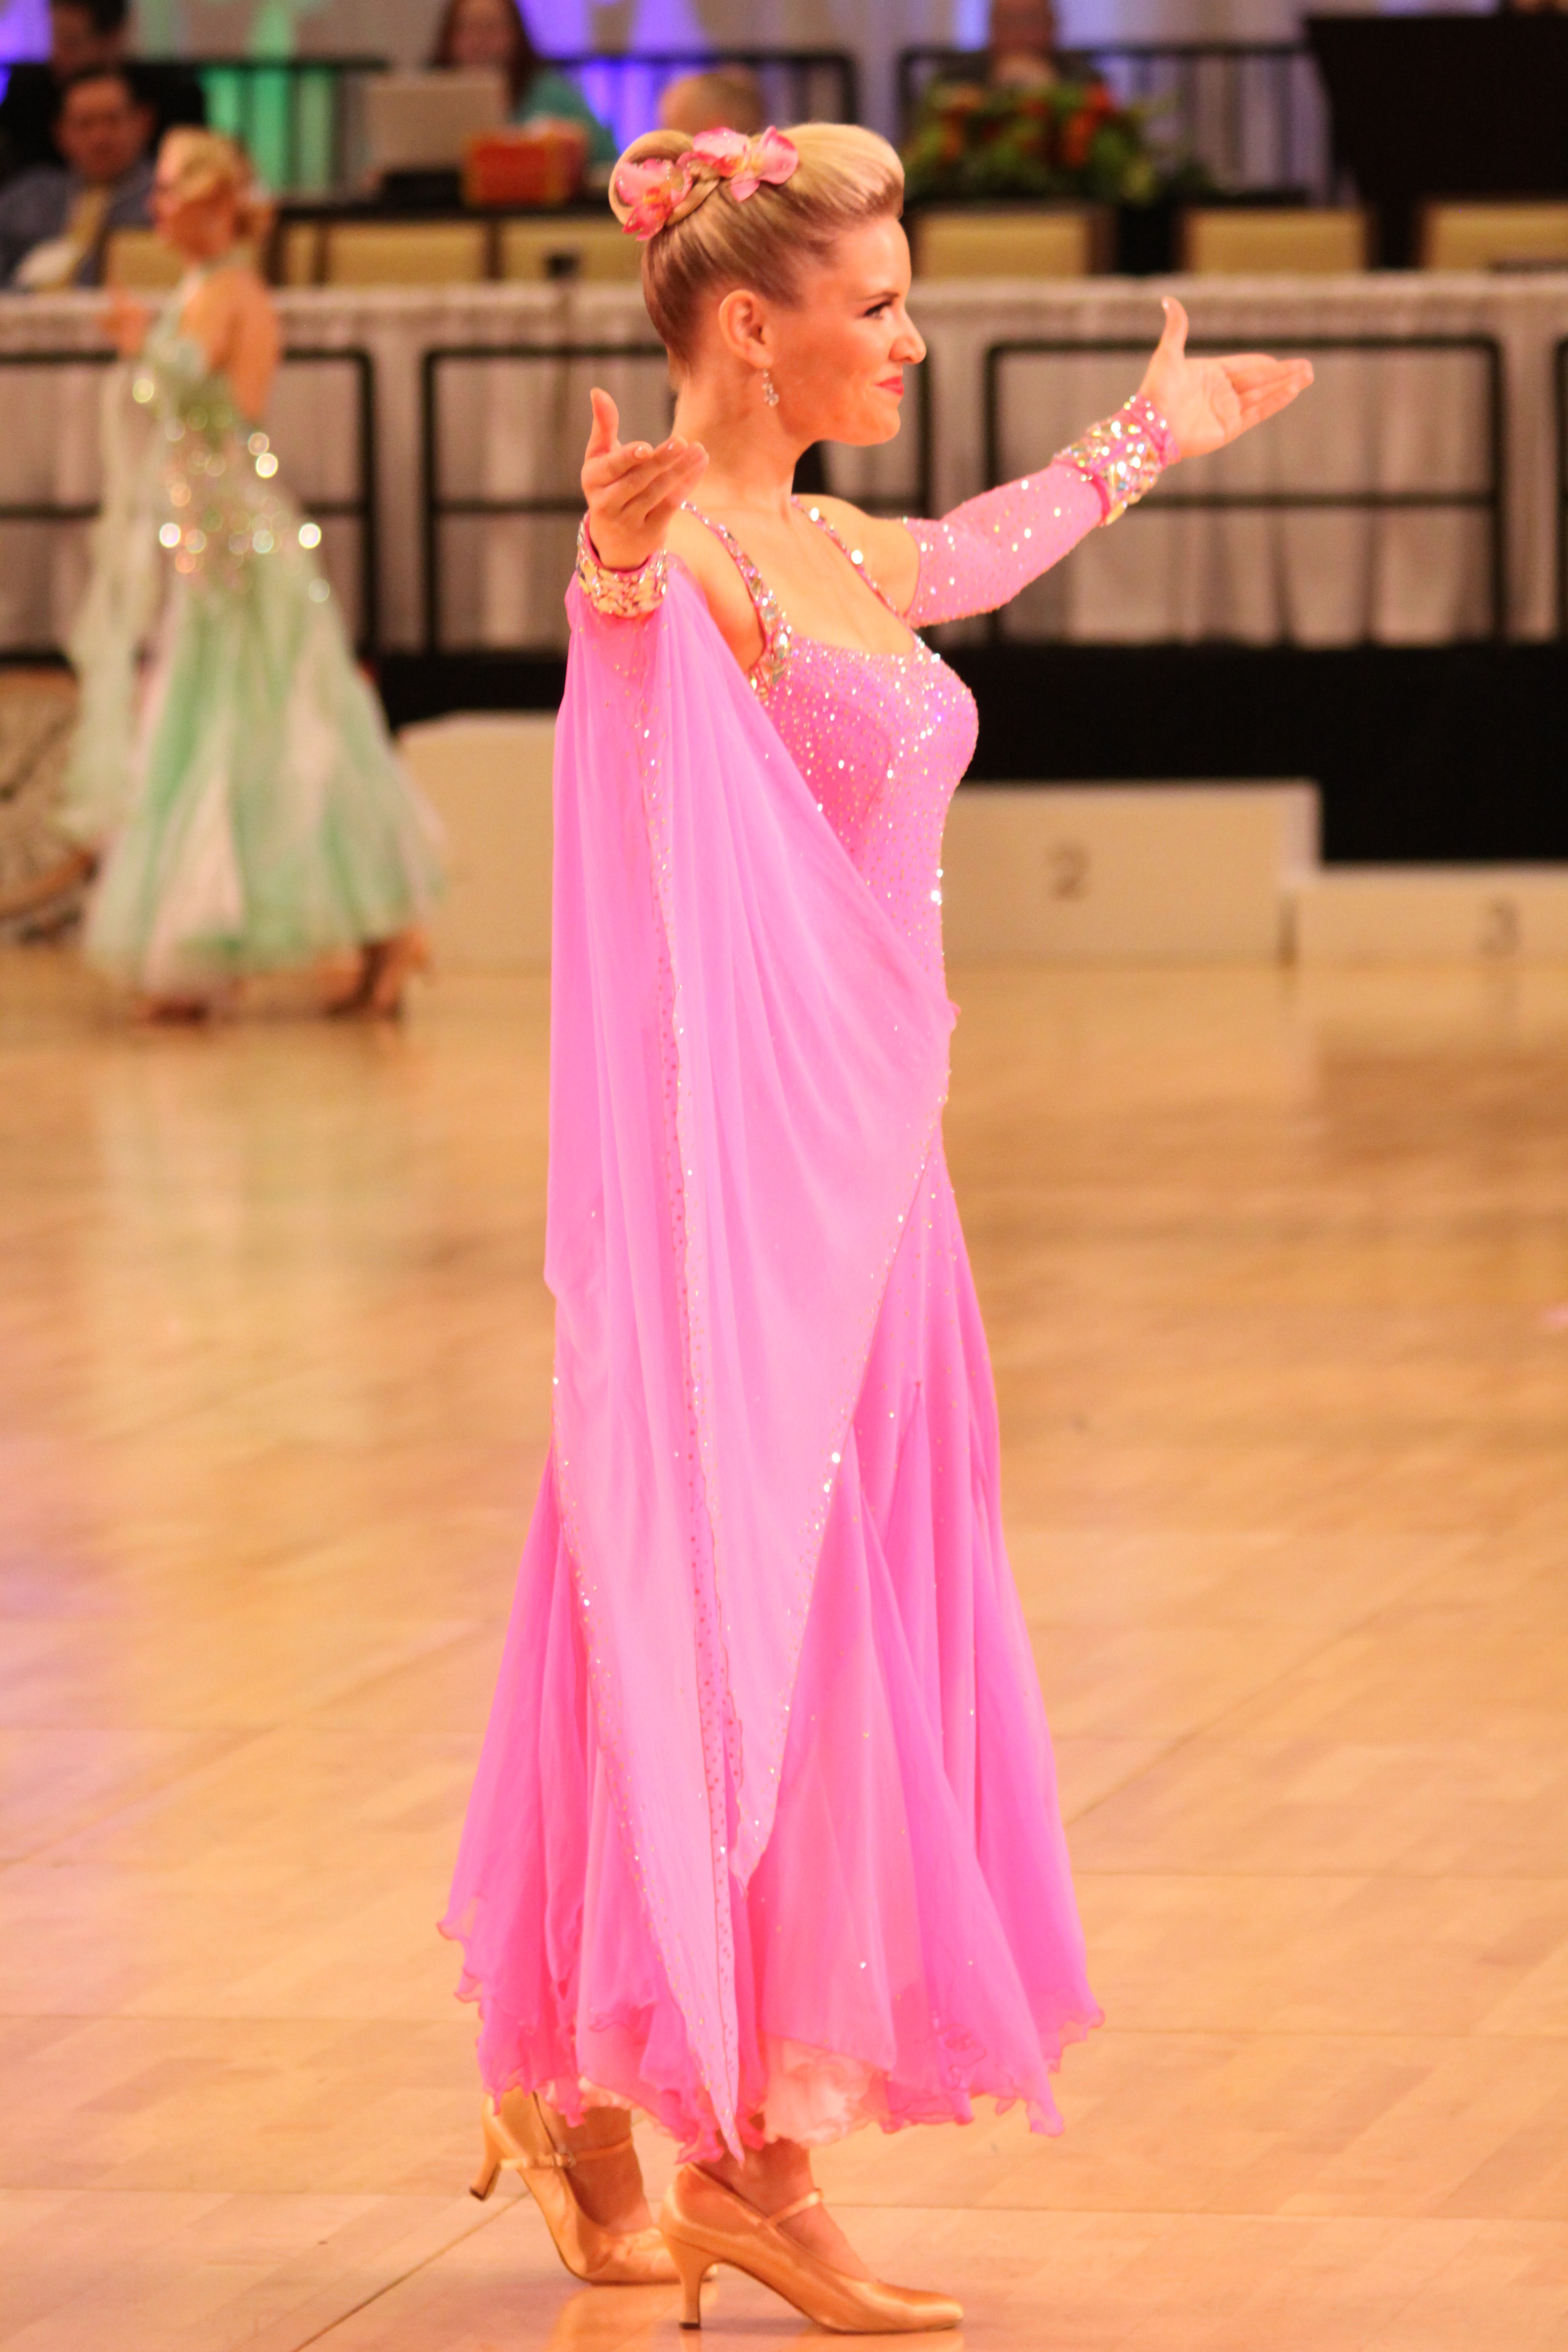 Holly Miller competitive ballroom dancer